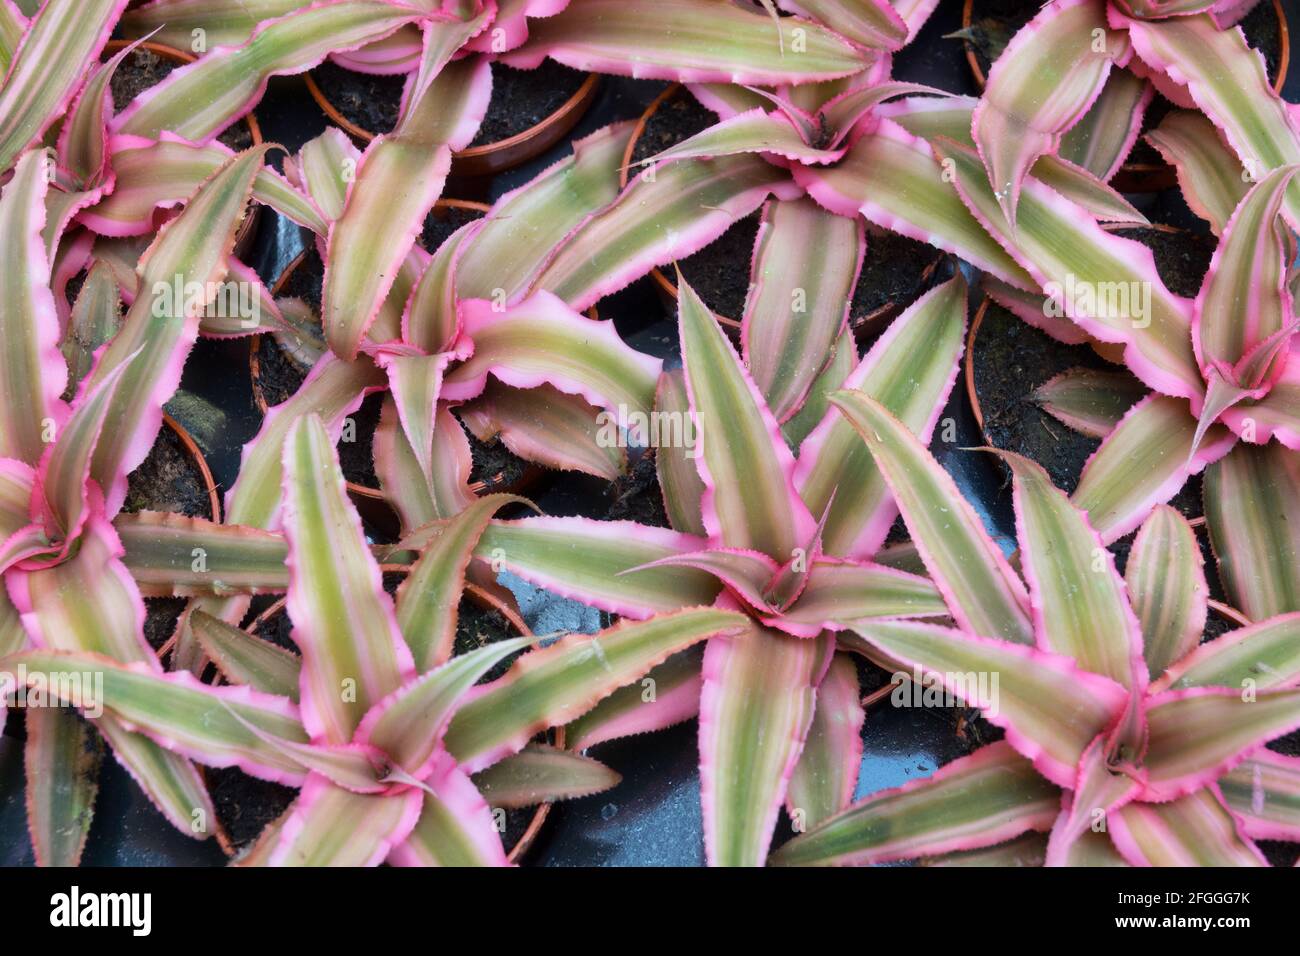 Earth Star Cryptanthus bivittatus young plants Houseplants Stock Photo